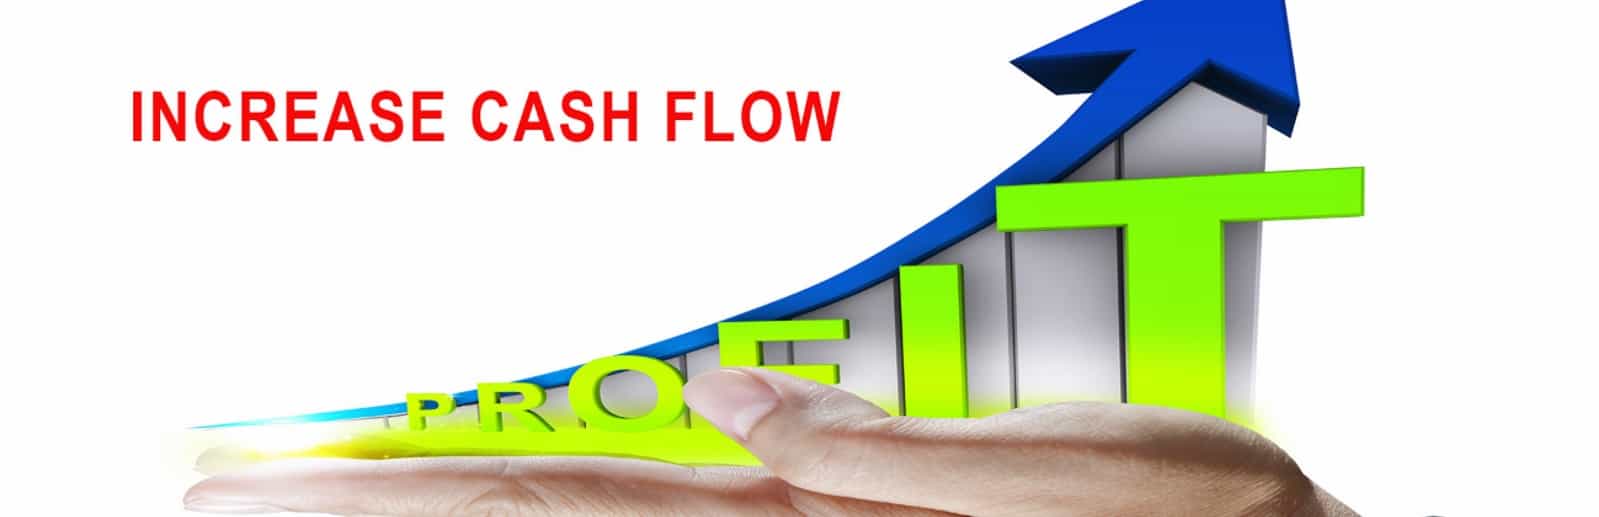 rising cash flow